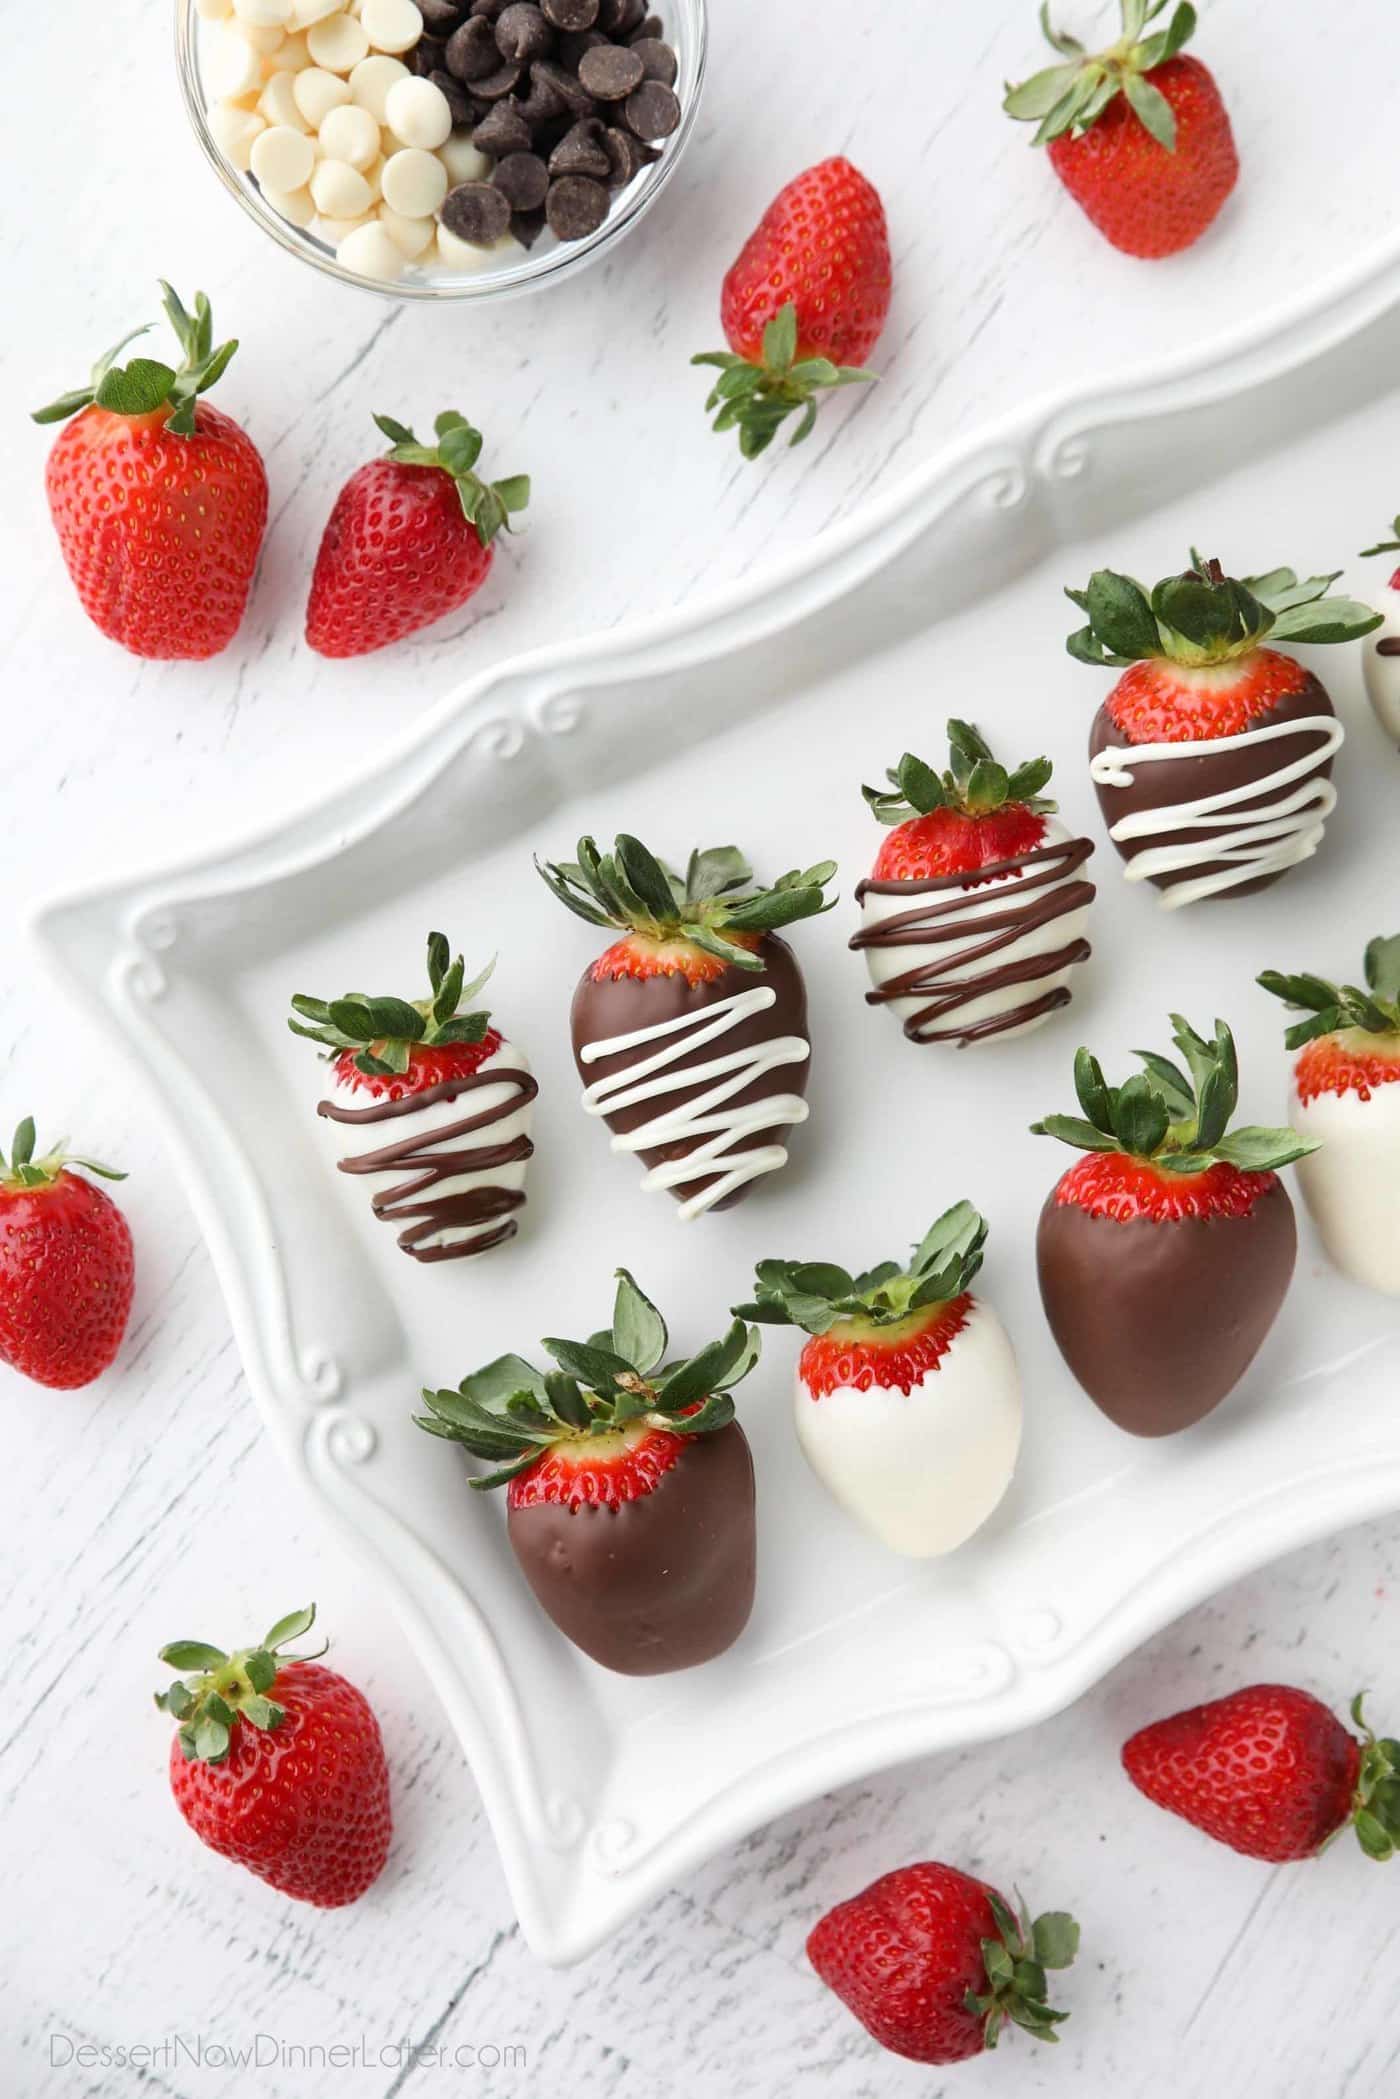 Gourmet Chocolate-Covered Strawberries Recipe 